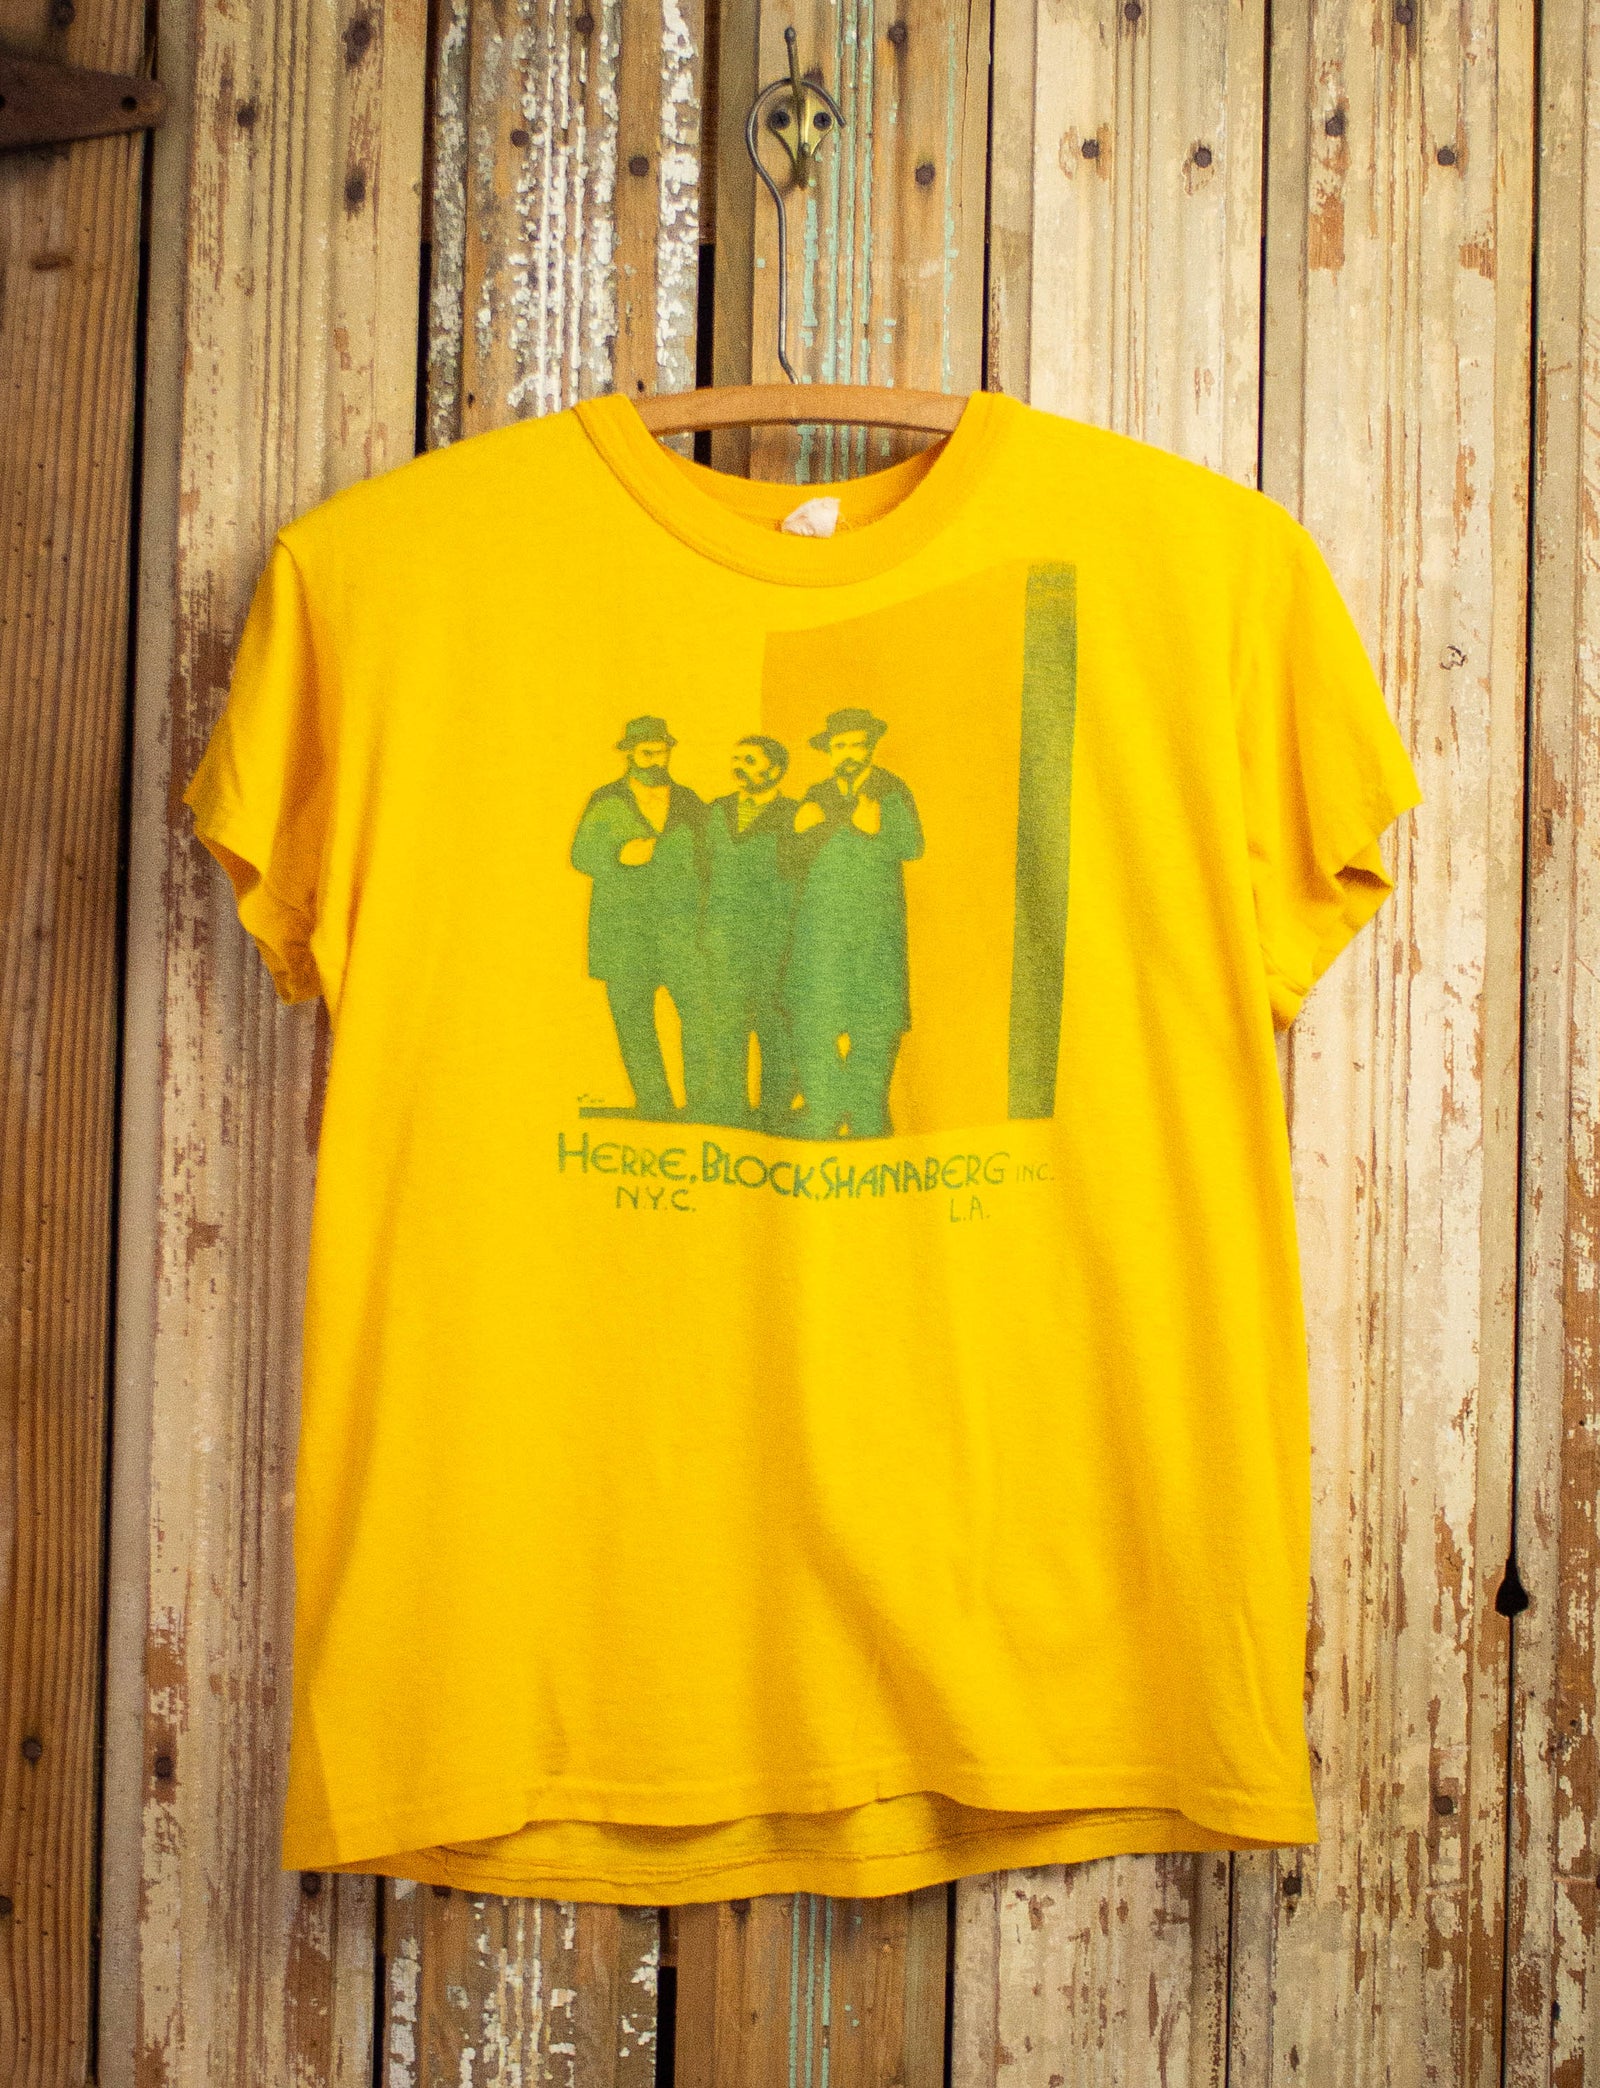 Predictor placere Skabelse Vintage Herre, Block, Shanaberg Crew Concert T Shirt 70s Yellow Small –  Black Shag Vintage